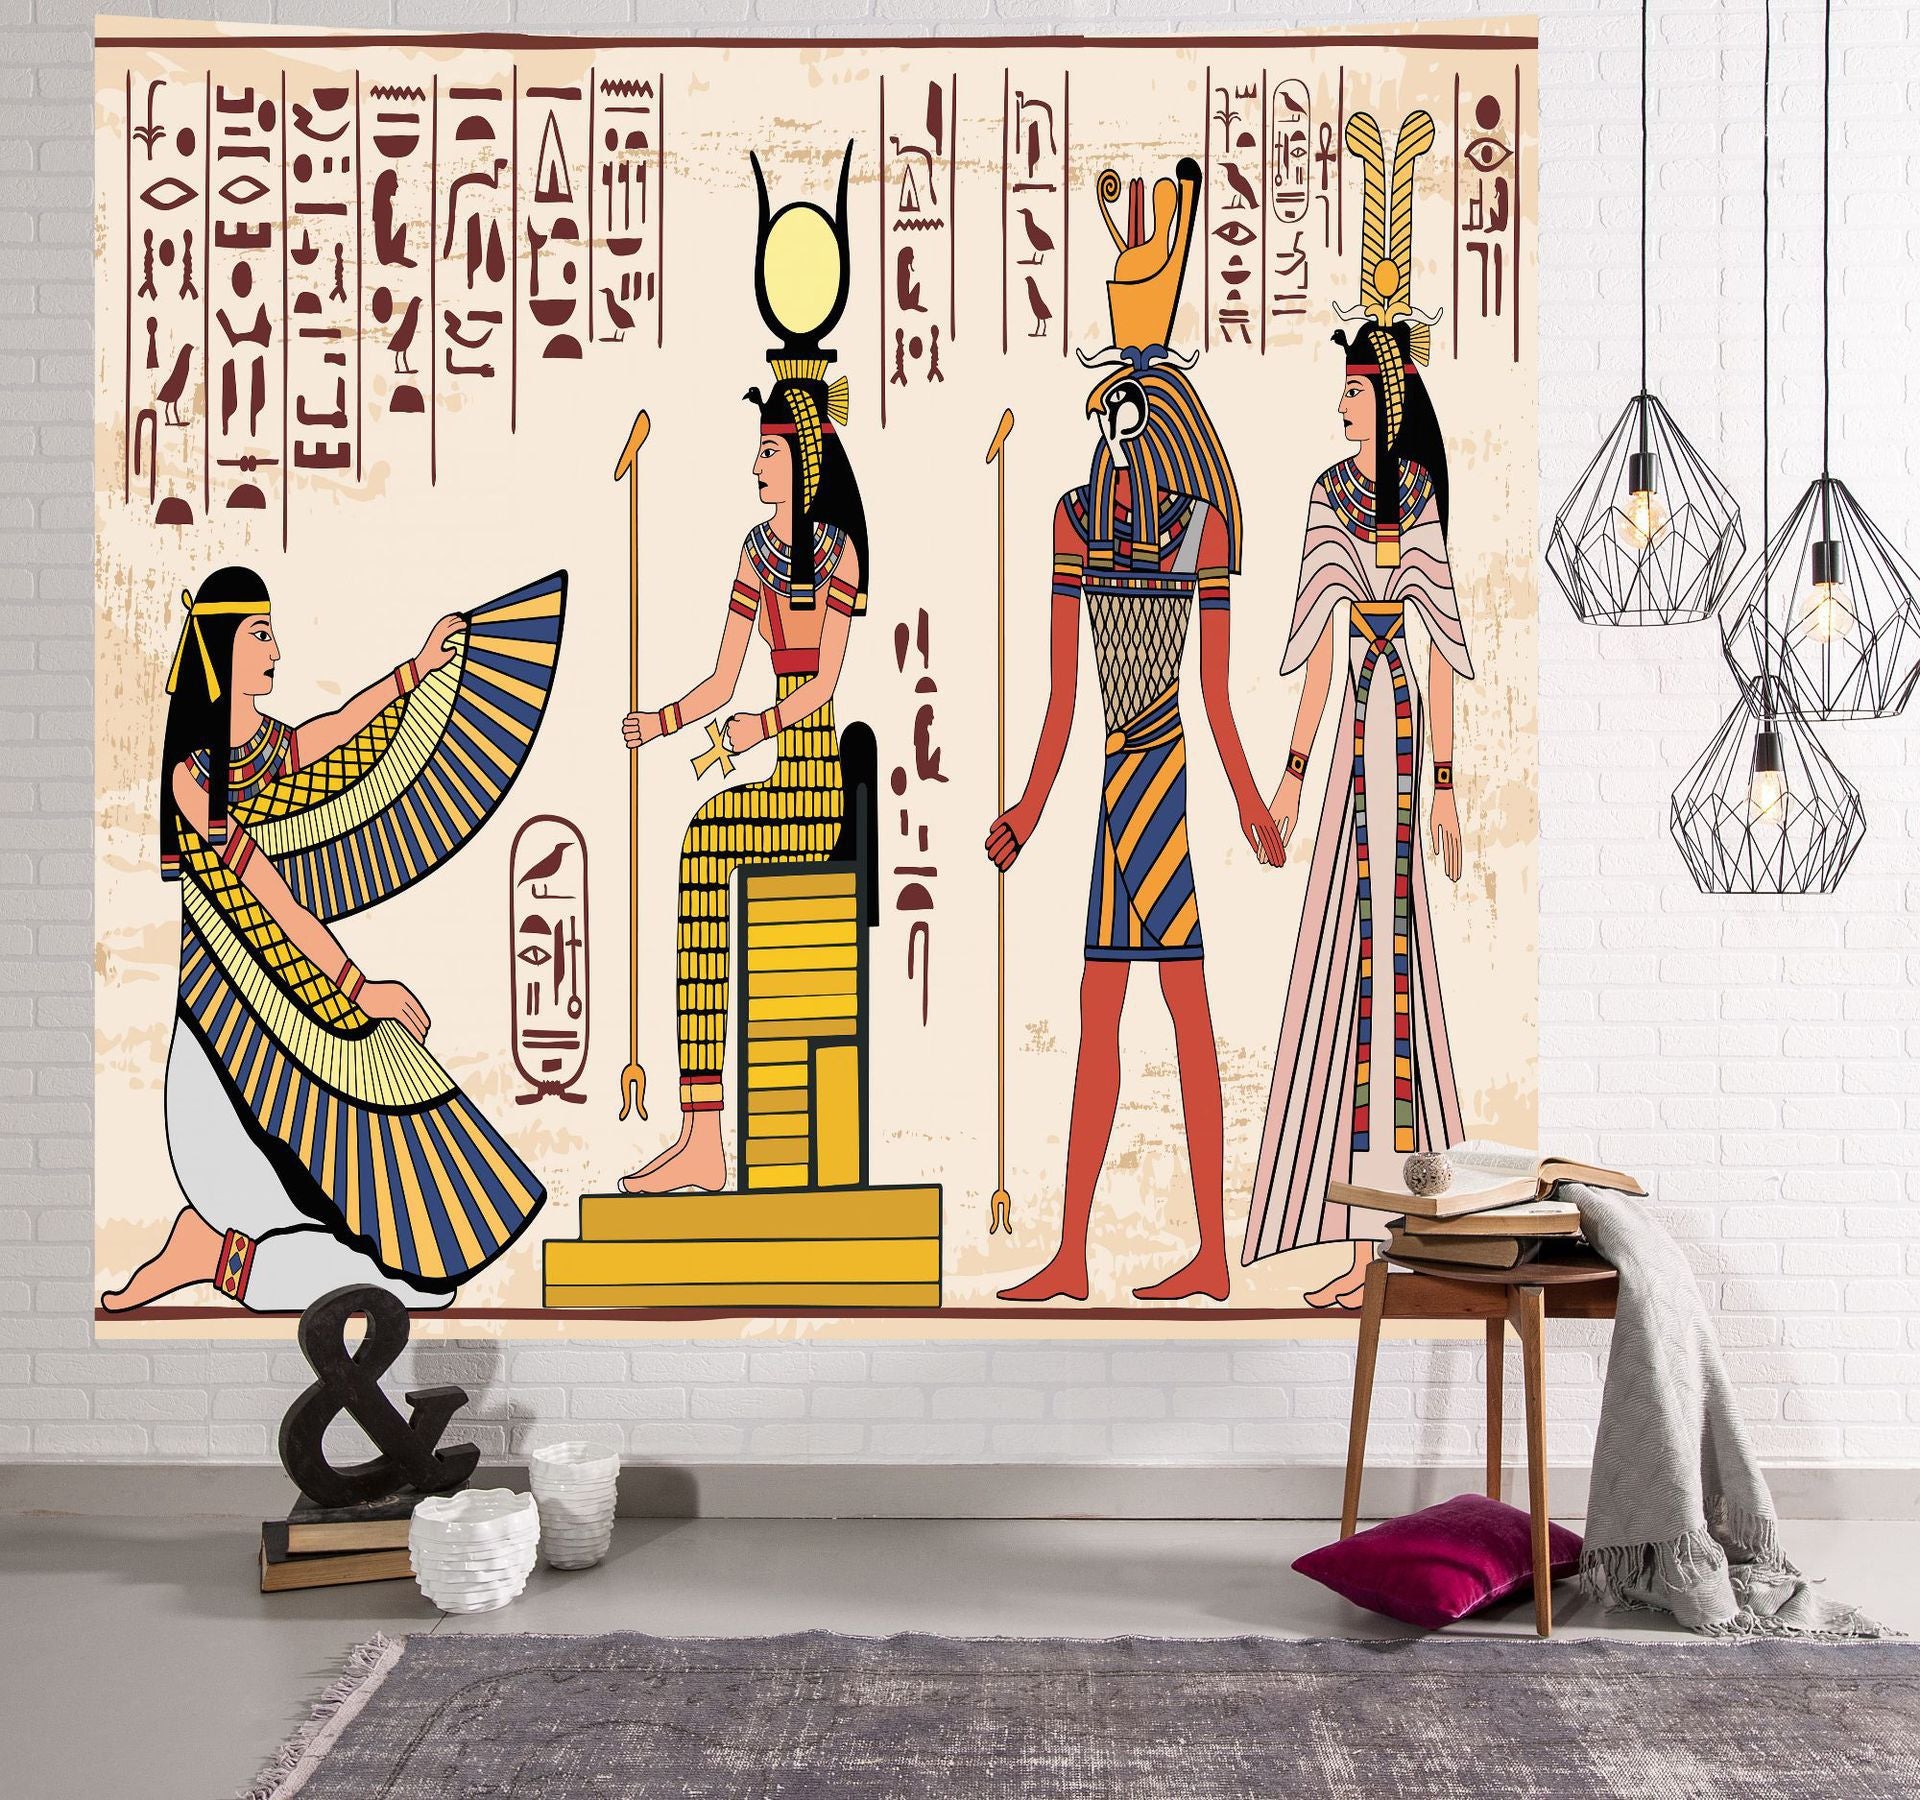 Sharif Purse Studio hand painted. Ancient Egyptian theme.